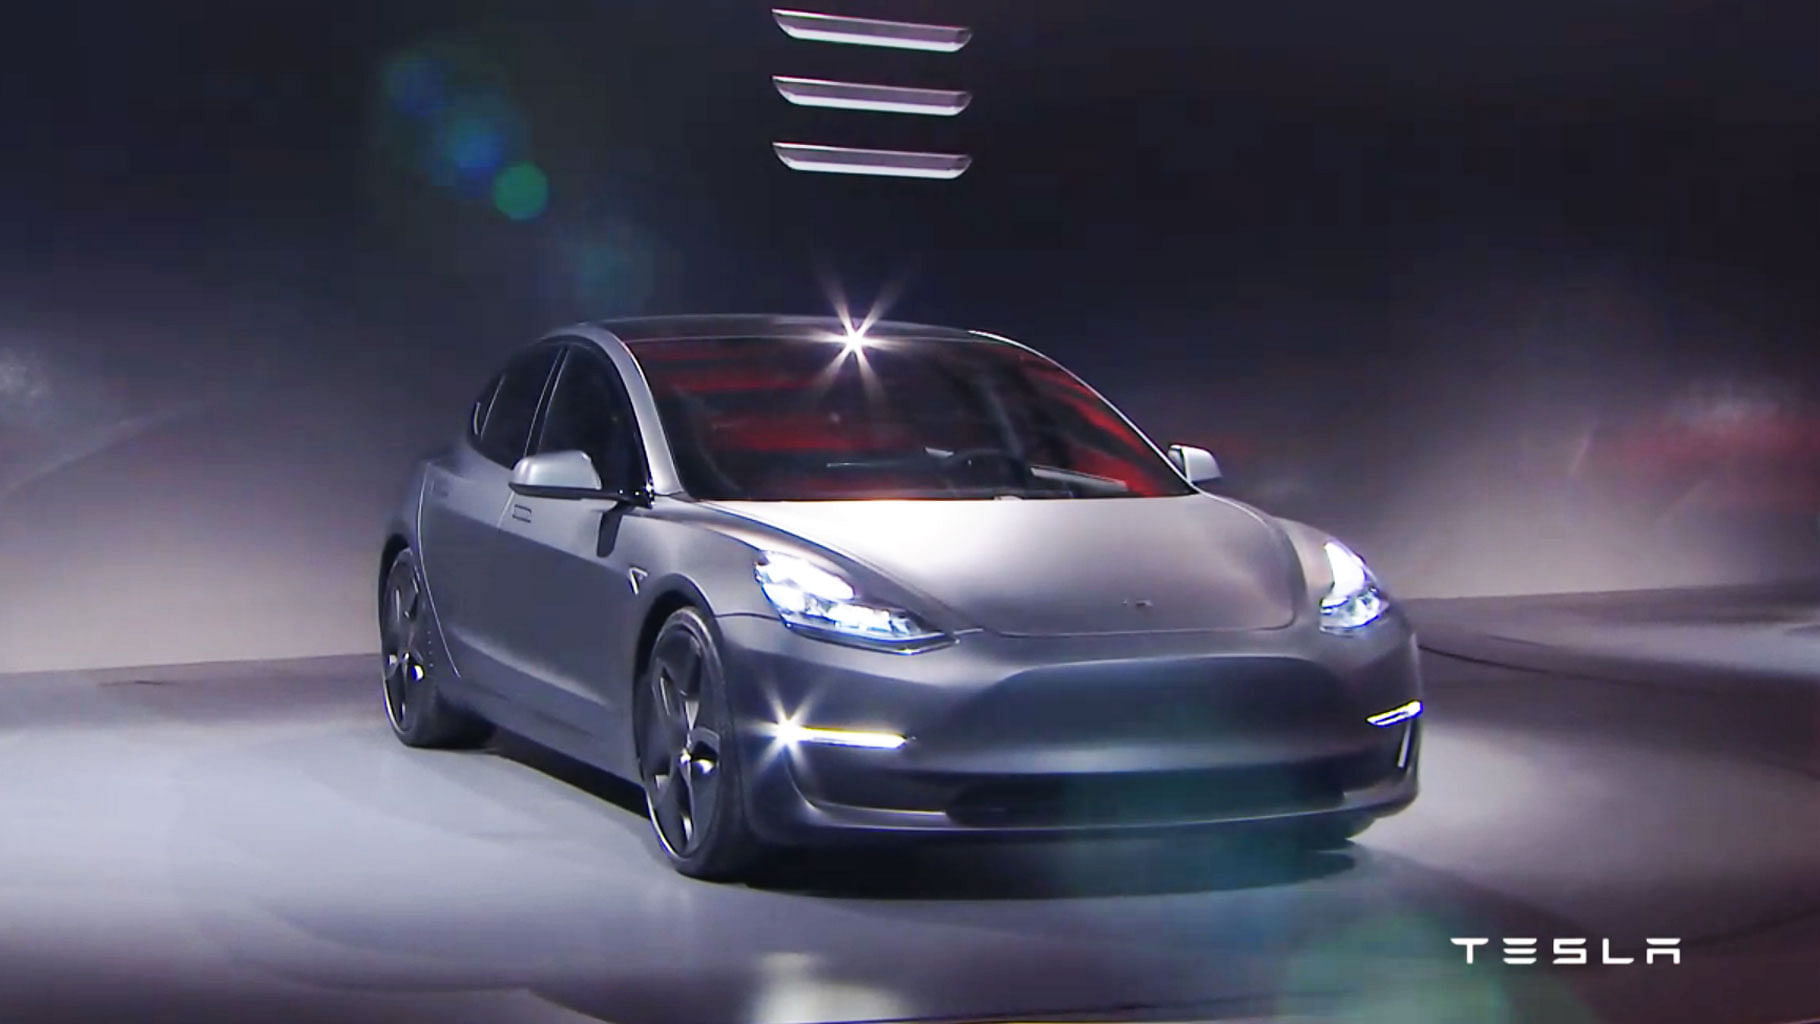 Elon Musk unveils Teslas Cybertruck electric offroad vehicle